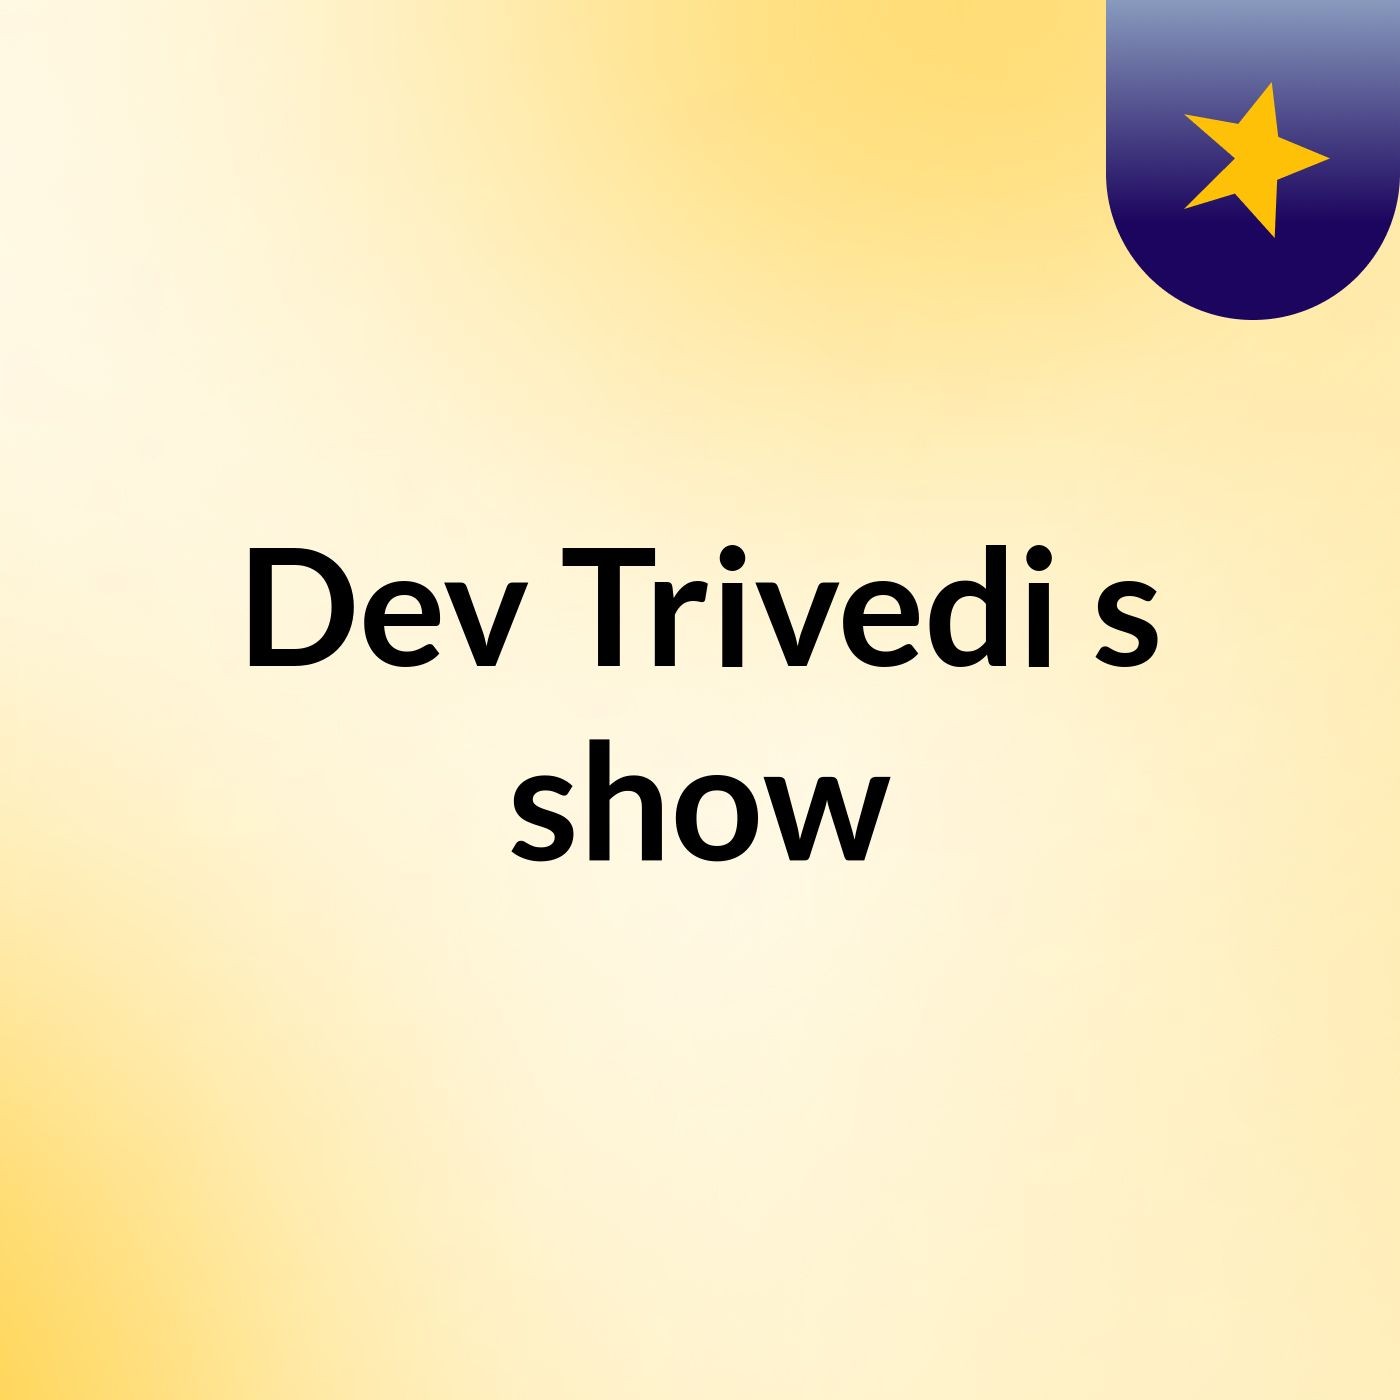 Dev Trivedi's show